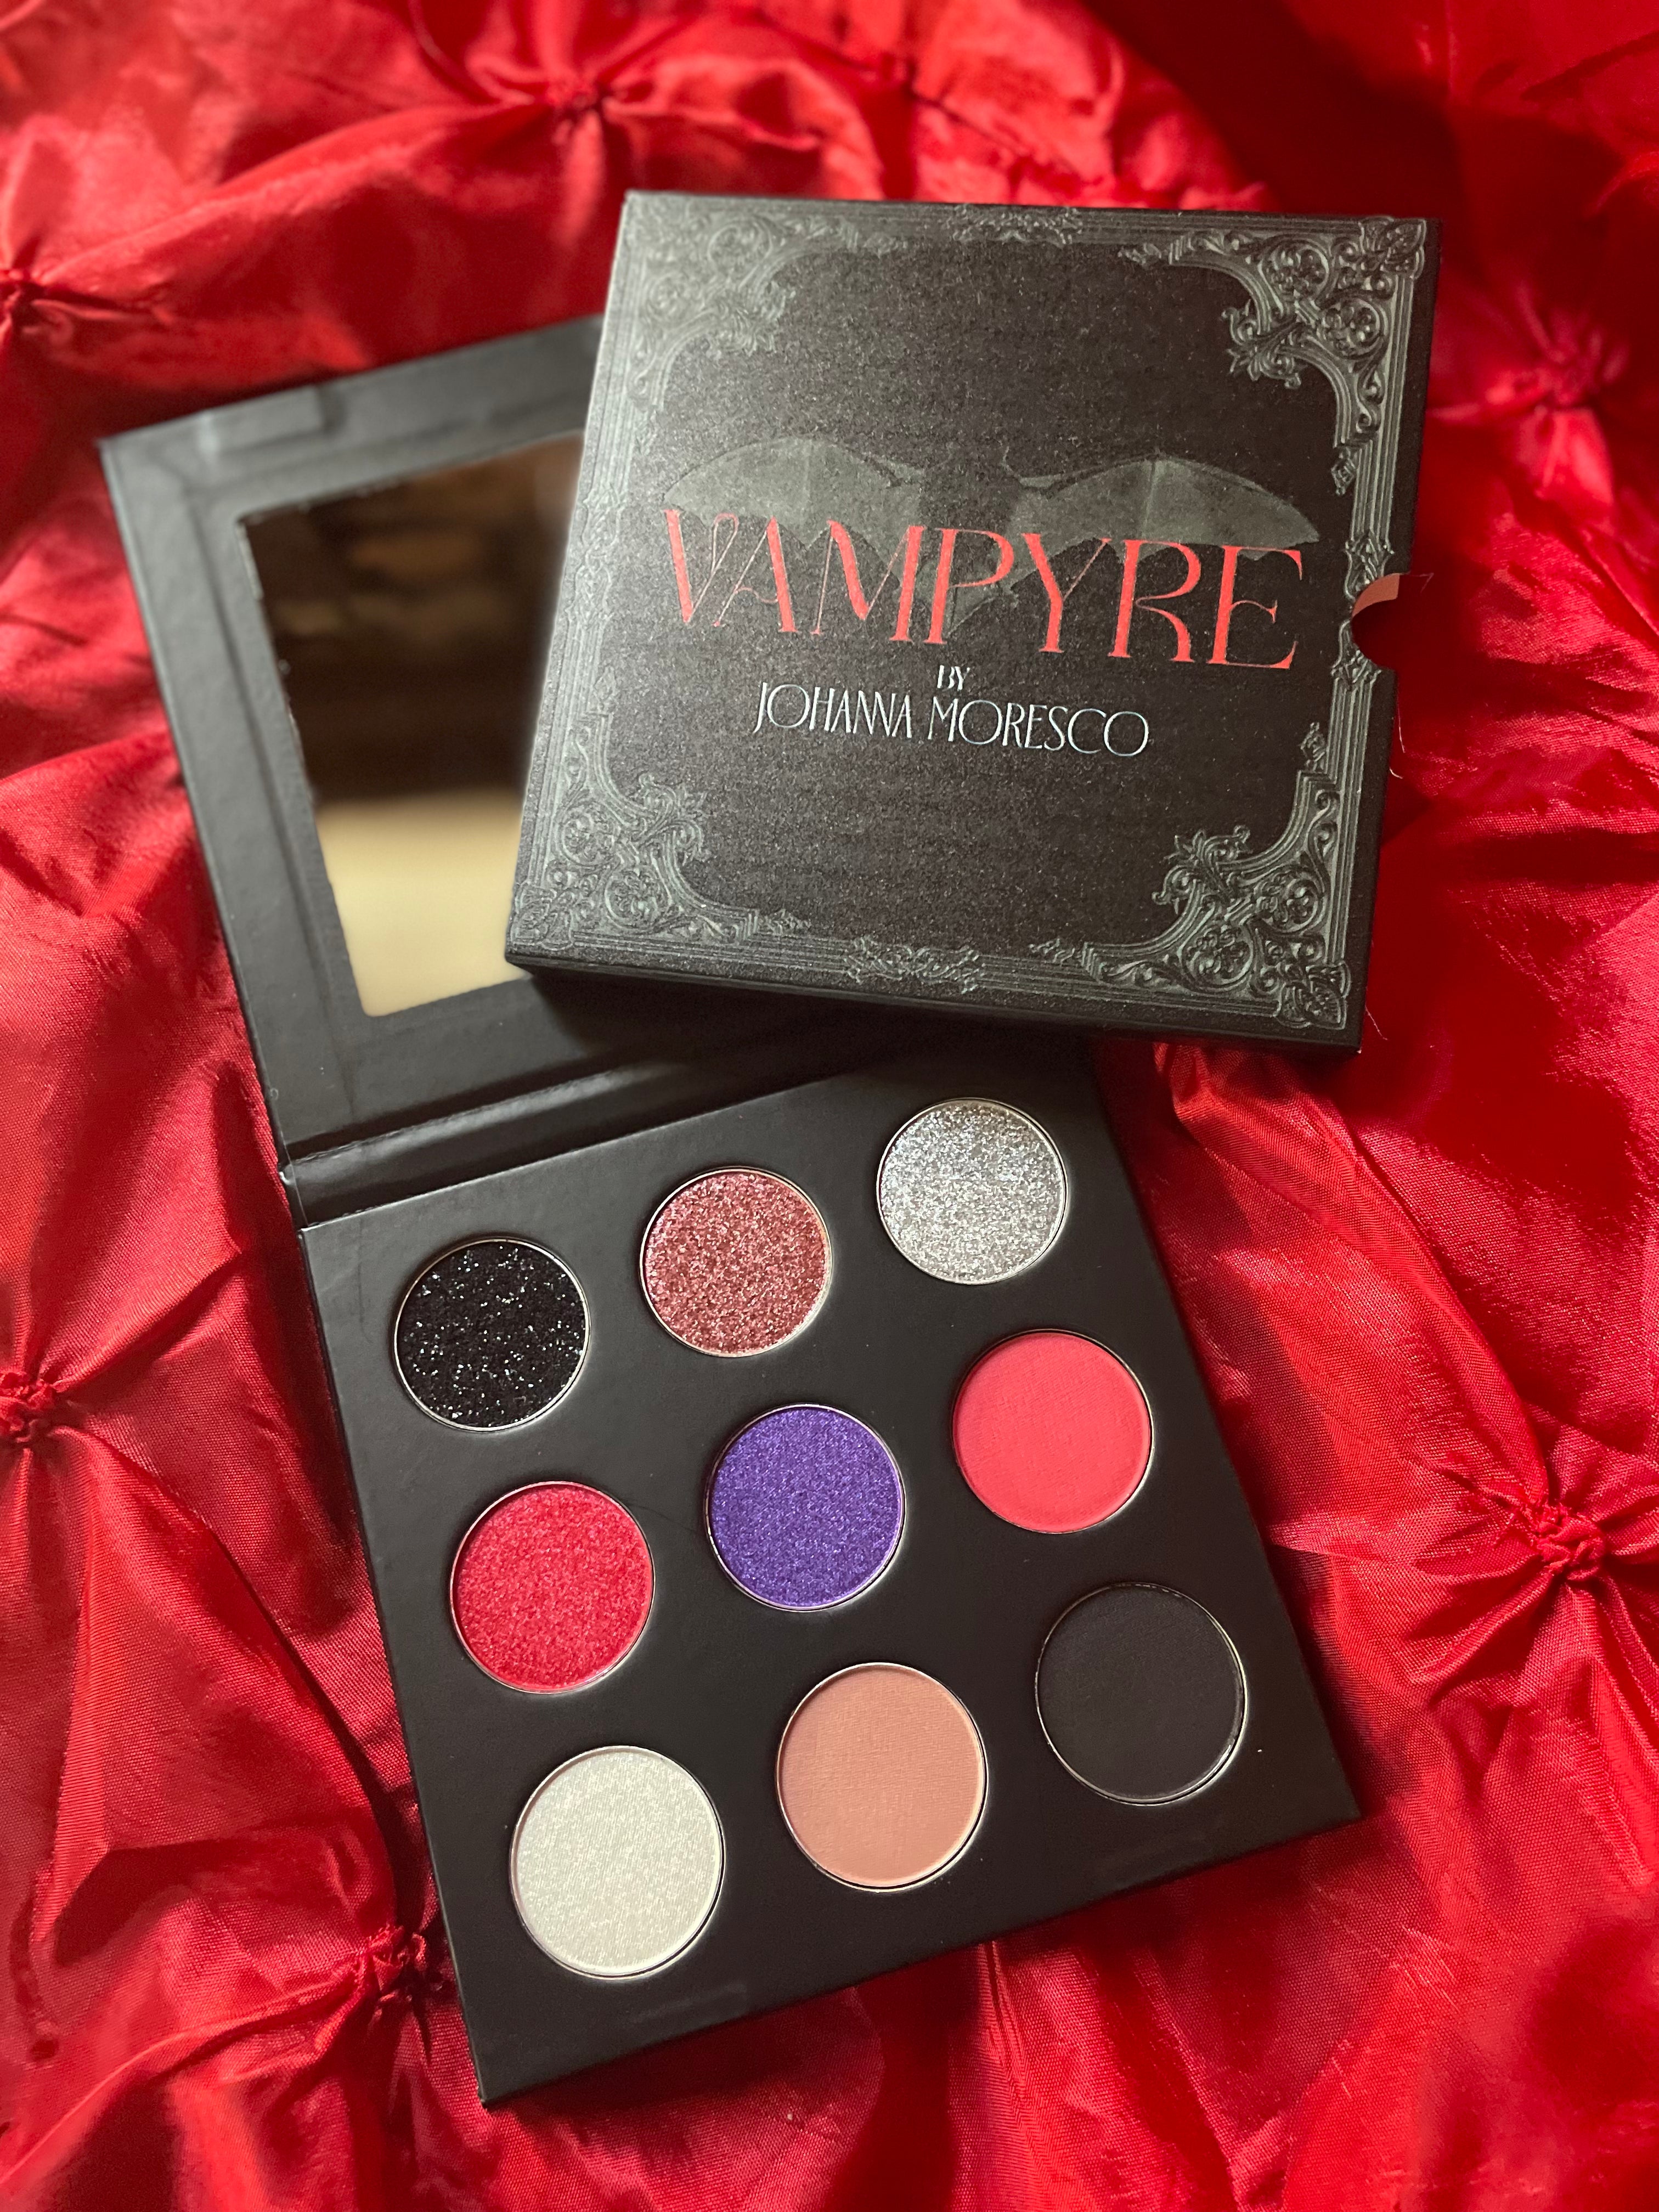 Vampyre: By JoHanna Moresco Cosmetics — JoHanna Moresco